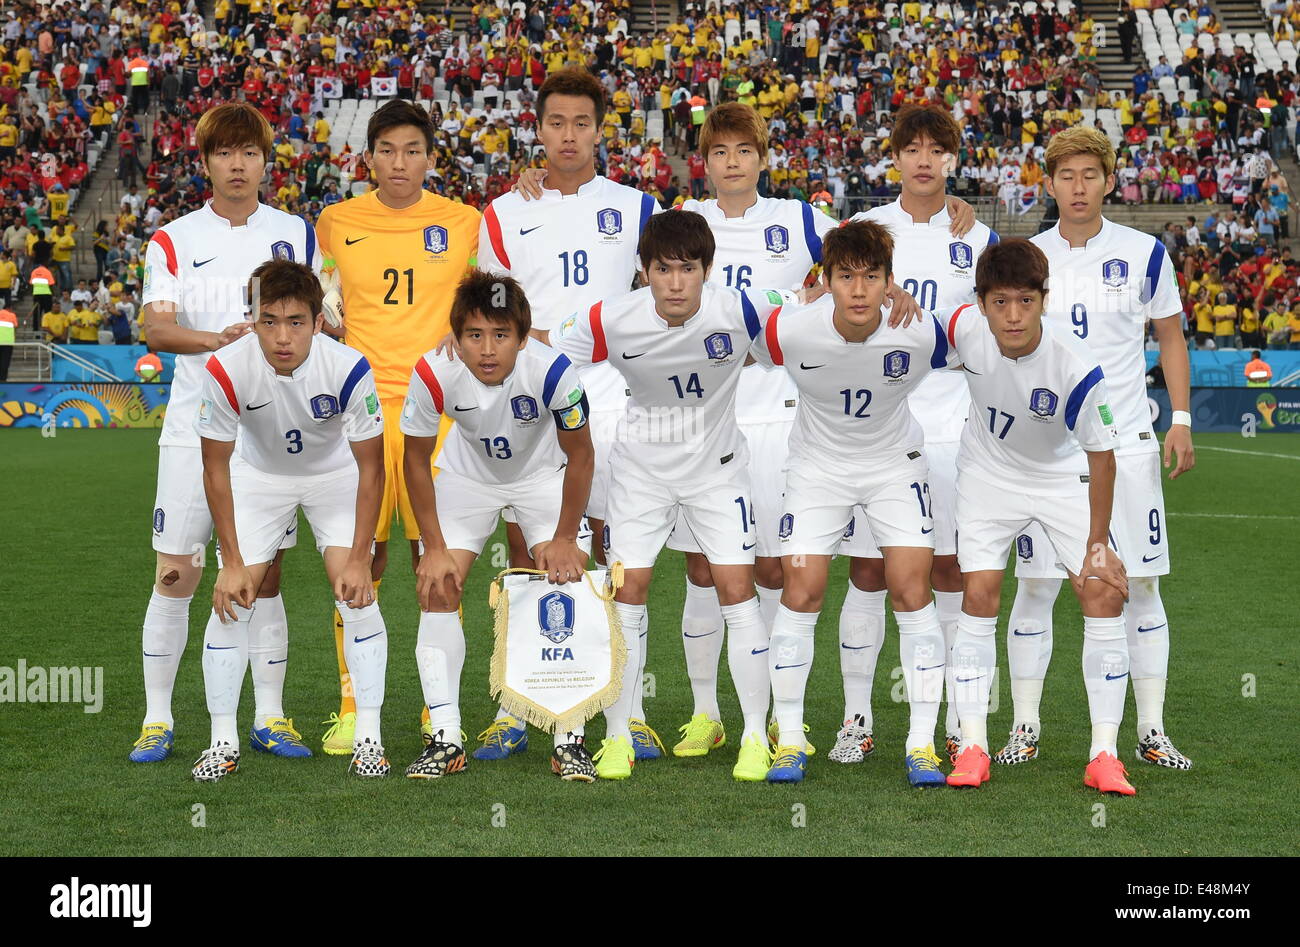 Sao Paulo, Brazil. 26th June, 2014. South Korea team group line-up (KOR) Football/Soccer : South Korea team group shot (Top row - L to R) Kim Young-Gwon, Kim Seung-Gyu, Kim Shin-Wook, Ki Sung-Yueng, Hong Jeong-Ho, Son Heung-Min, (Bottom row - L to R) Yun Suk-Young, Koo Ja-Cheol, Han Kook-Young, Lee Yong and Lee Chung-Yong before the FIFA World Cup Brazil 2014 Group H match between South Korea 0-1 Belgium at Arena de Sao Paulo in Sao Paulo, Brazil . © SONG Seak-In/AFLO/Alamy Live News Stock Photo